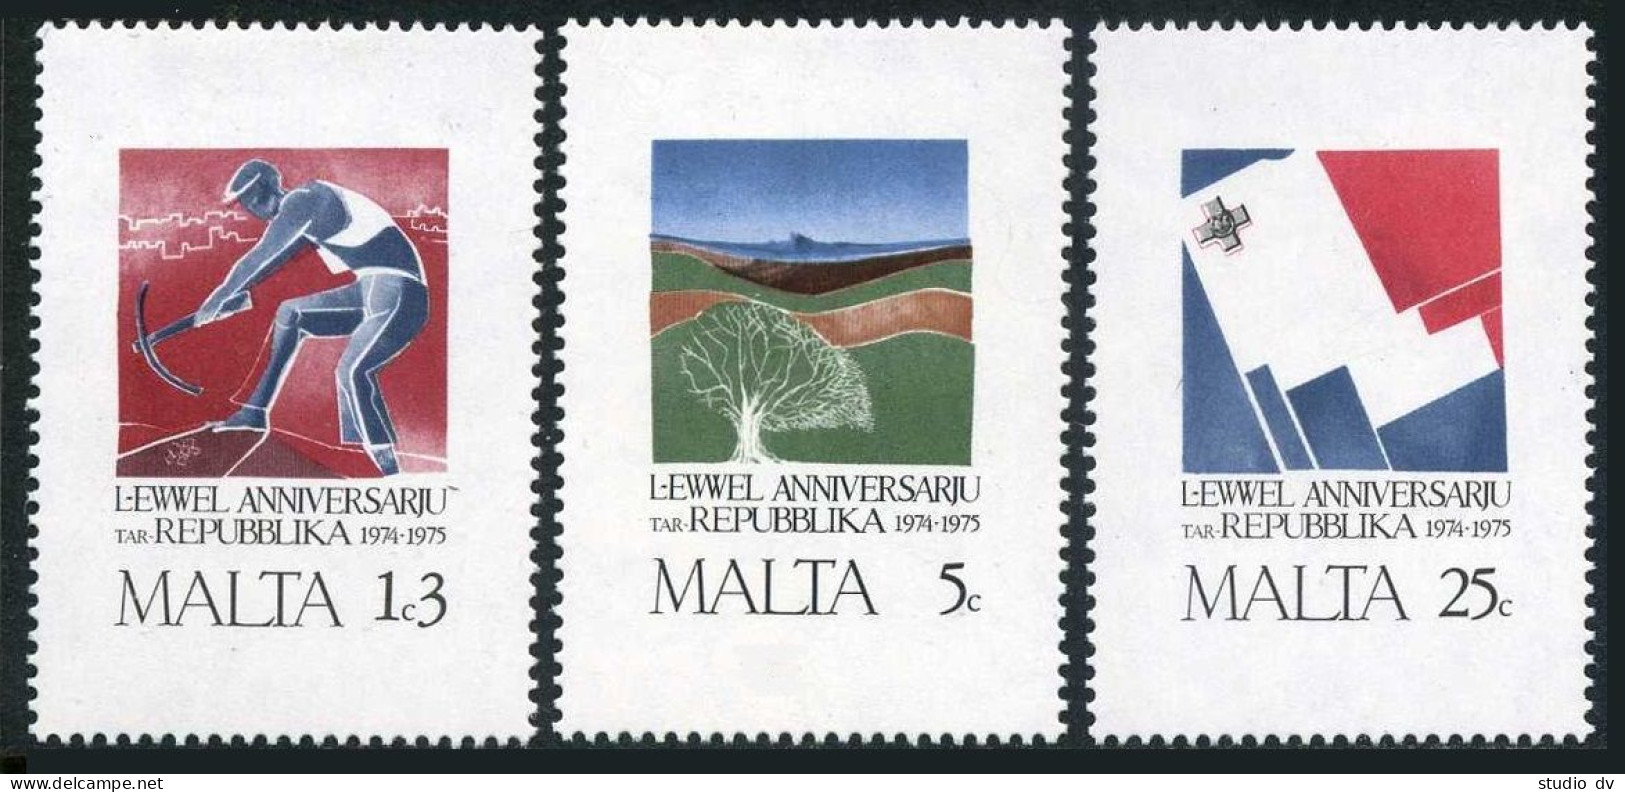 Malta 501-503, MNH. Mi 521-523. Malta Republic-1st Ann.1975. Environment, Flags. - Malte